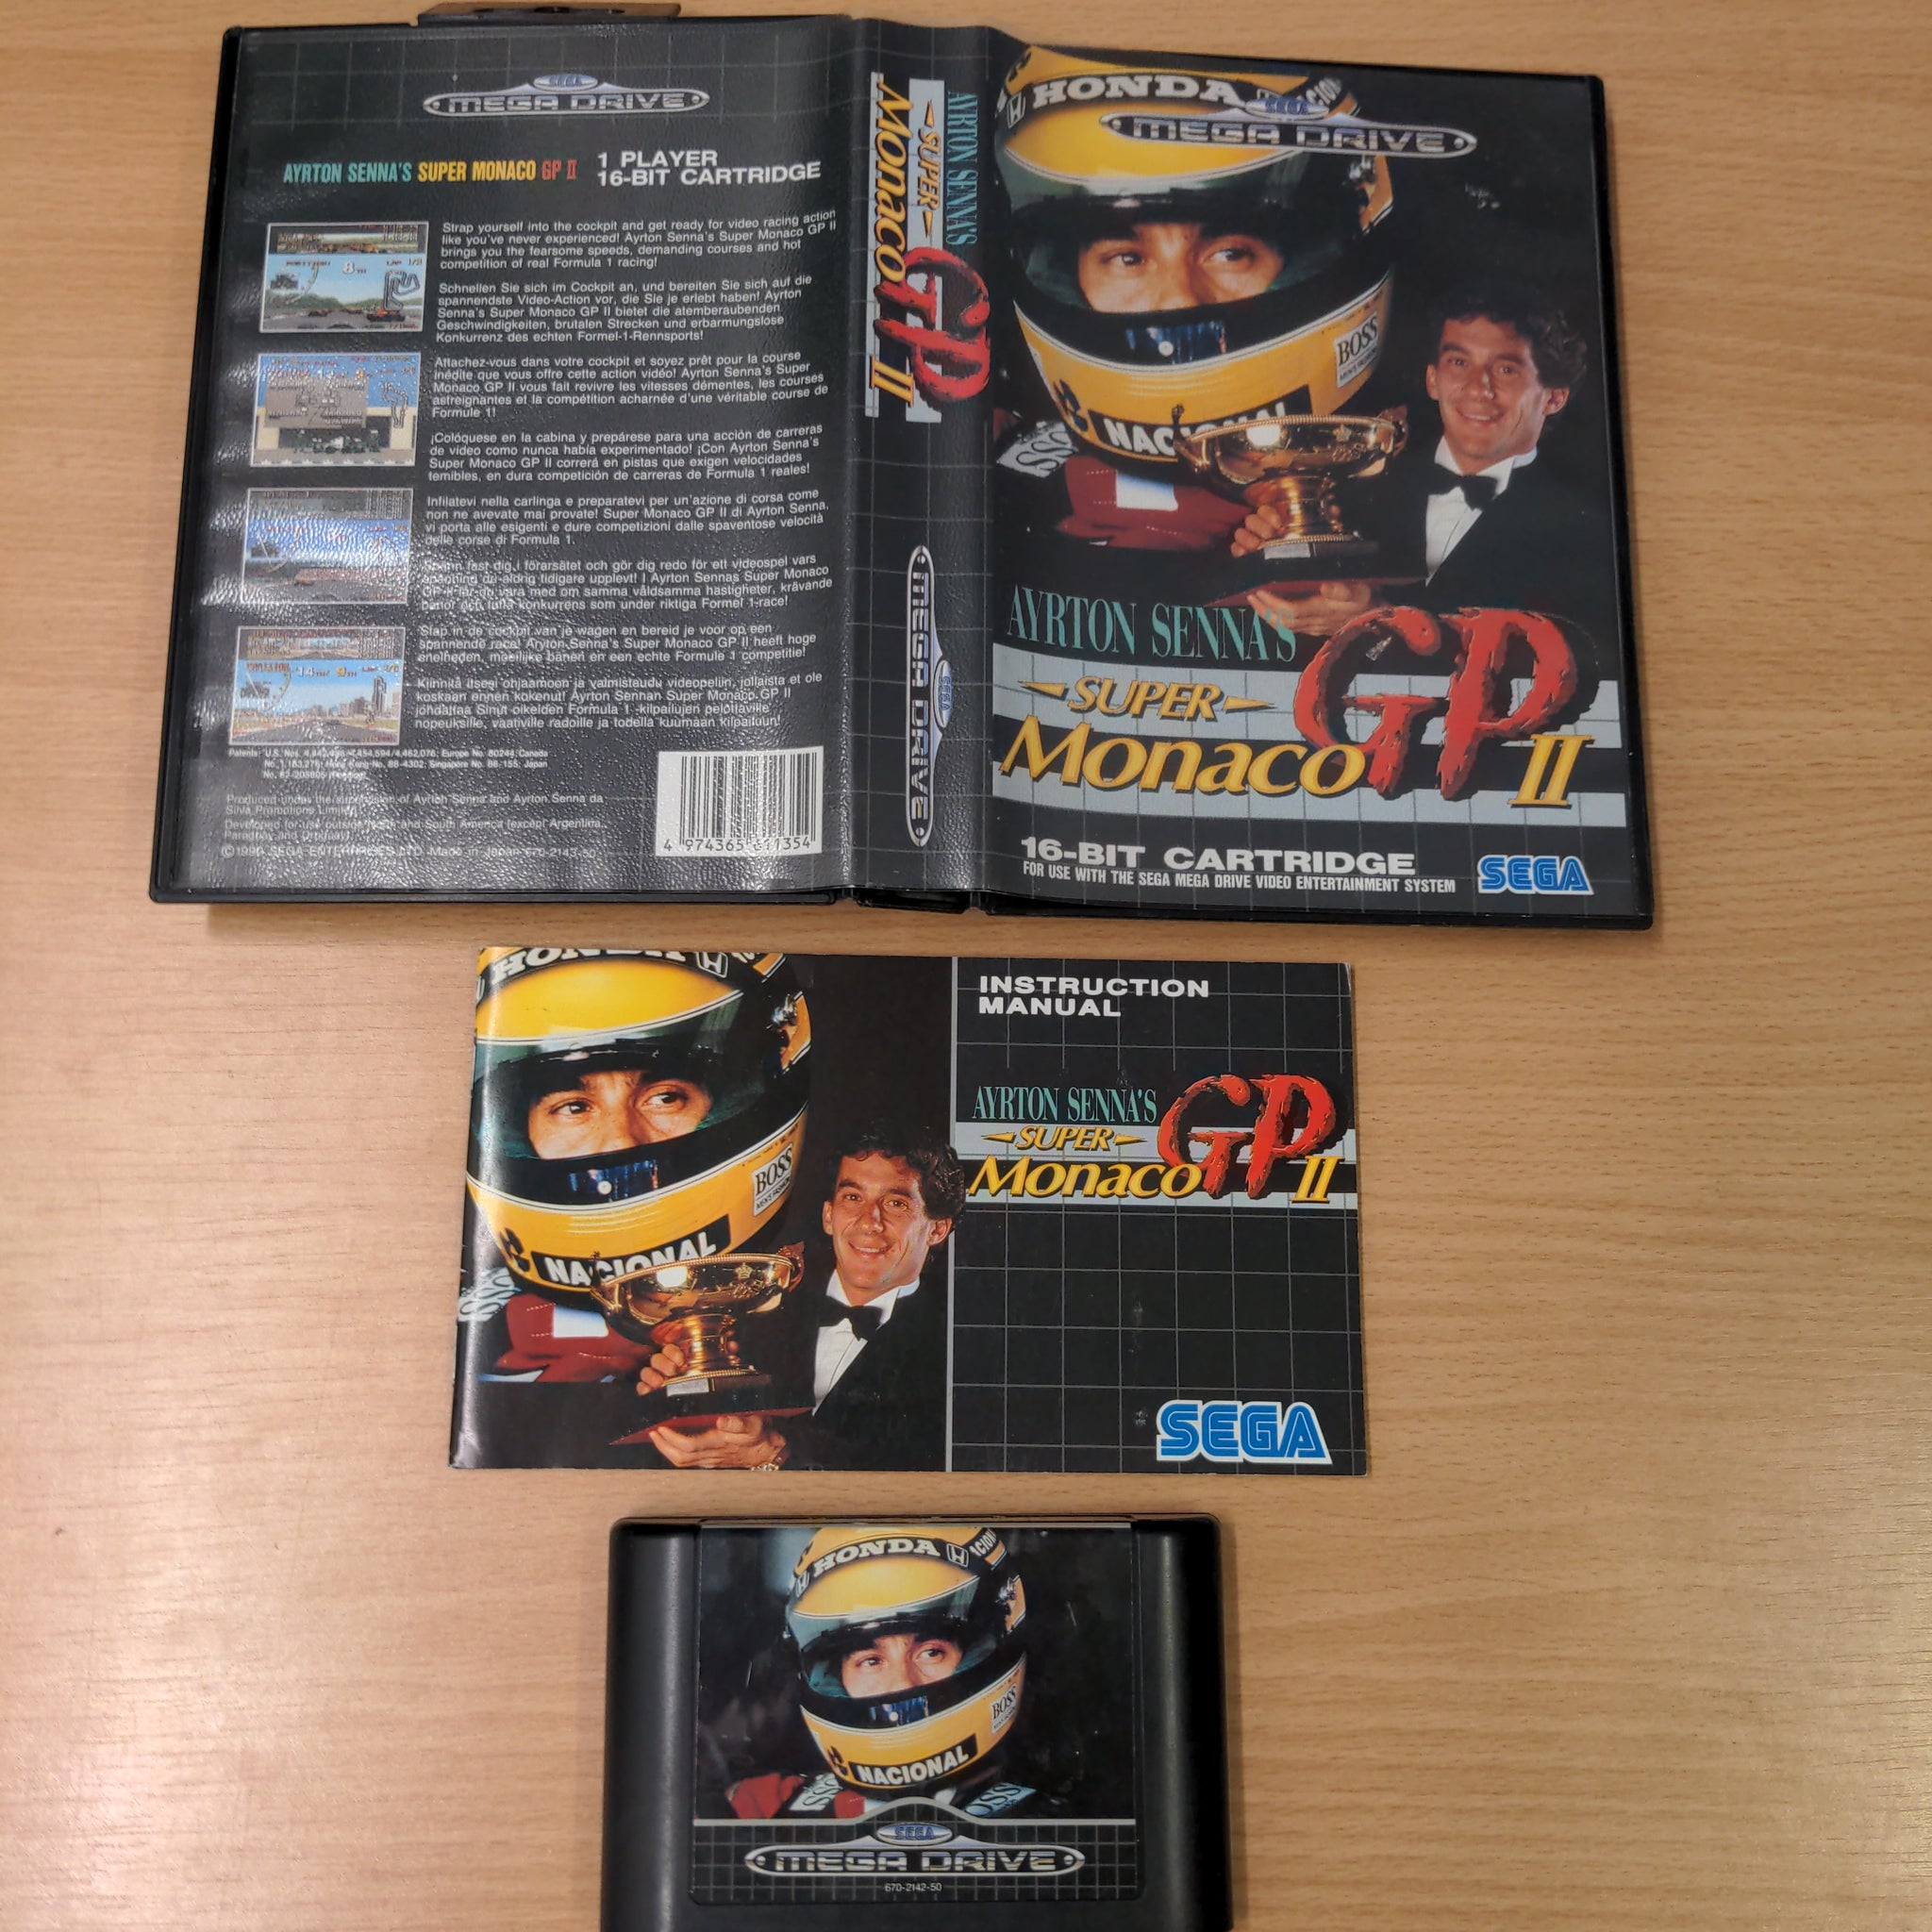 Ayrton Senna's Super Monaco GP II Sega Mega Drive game complete